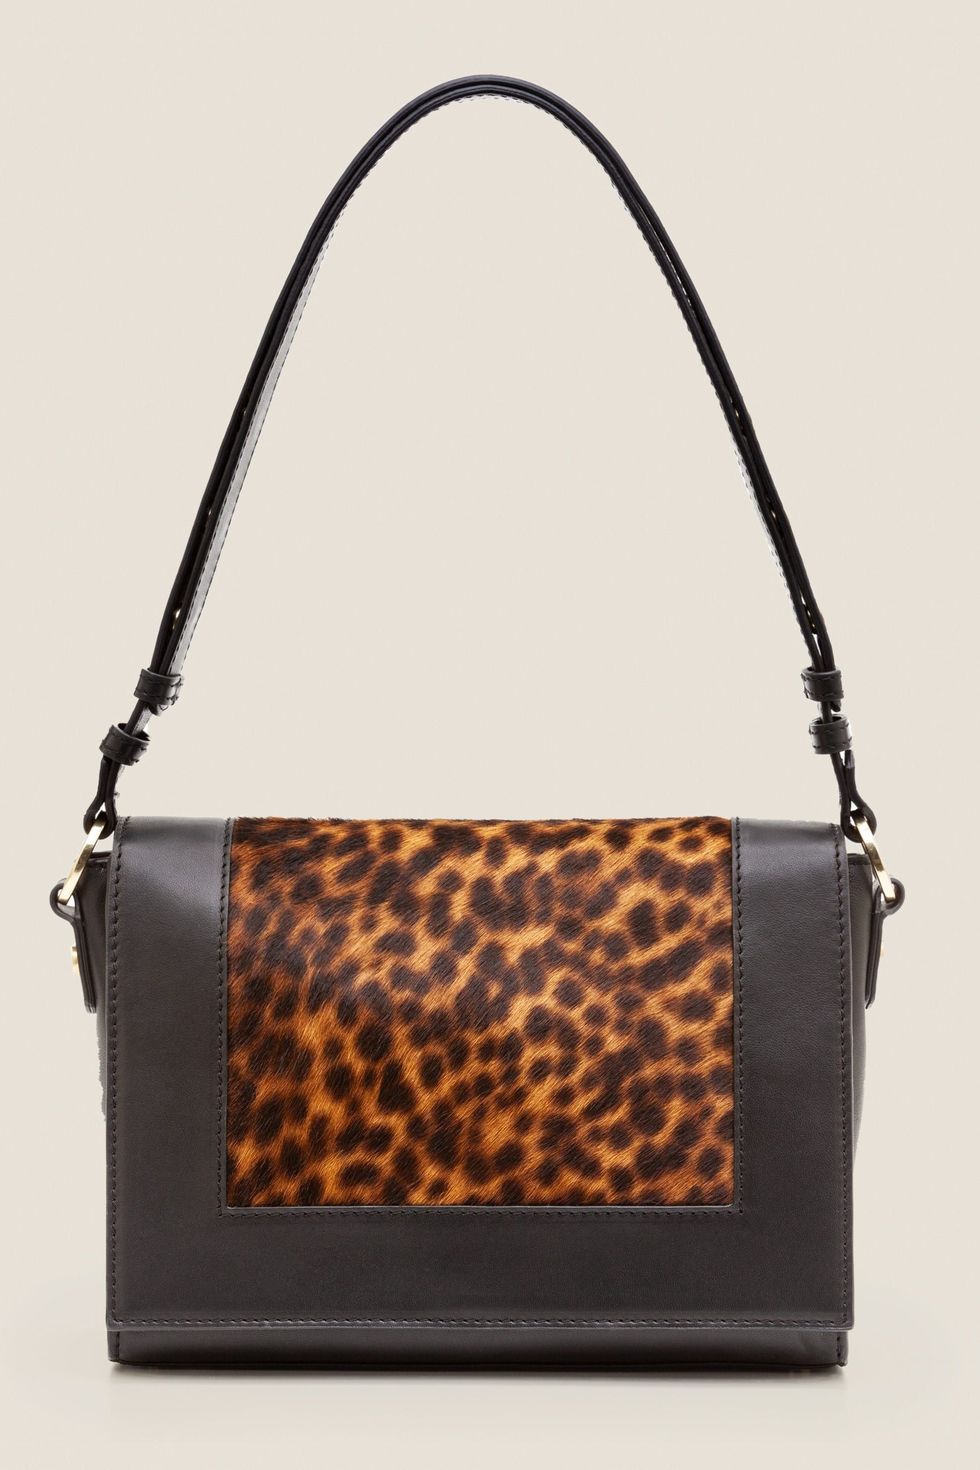 Stamford Multiway Bag - Tan Leopard/Black